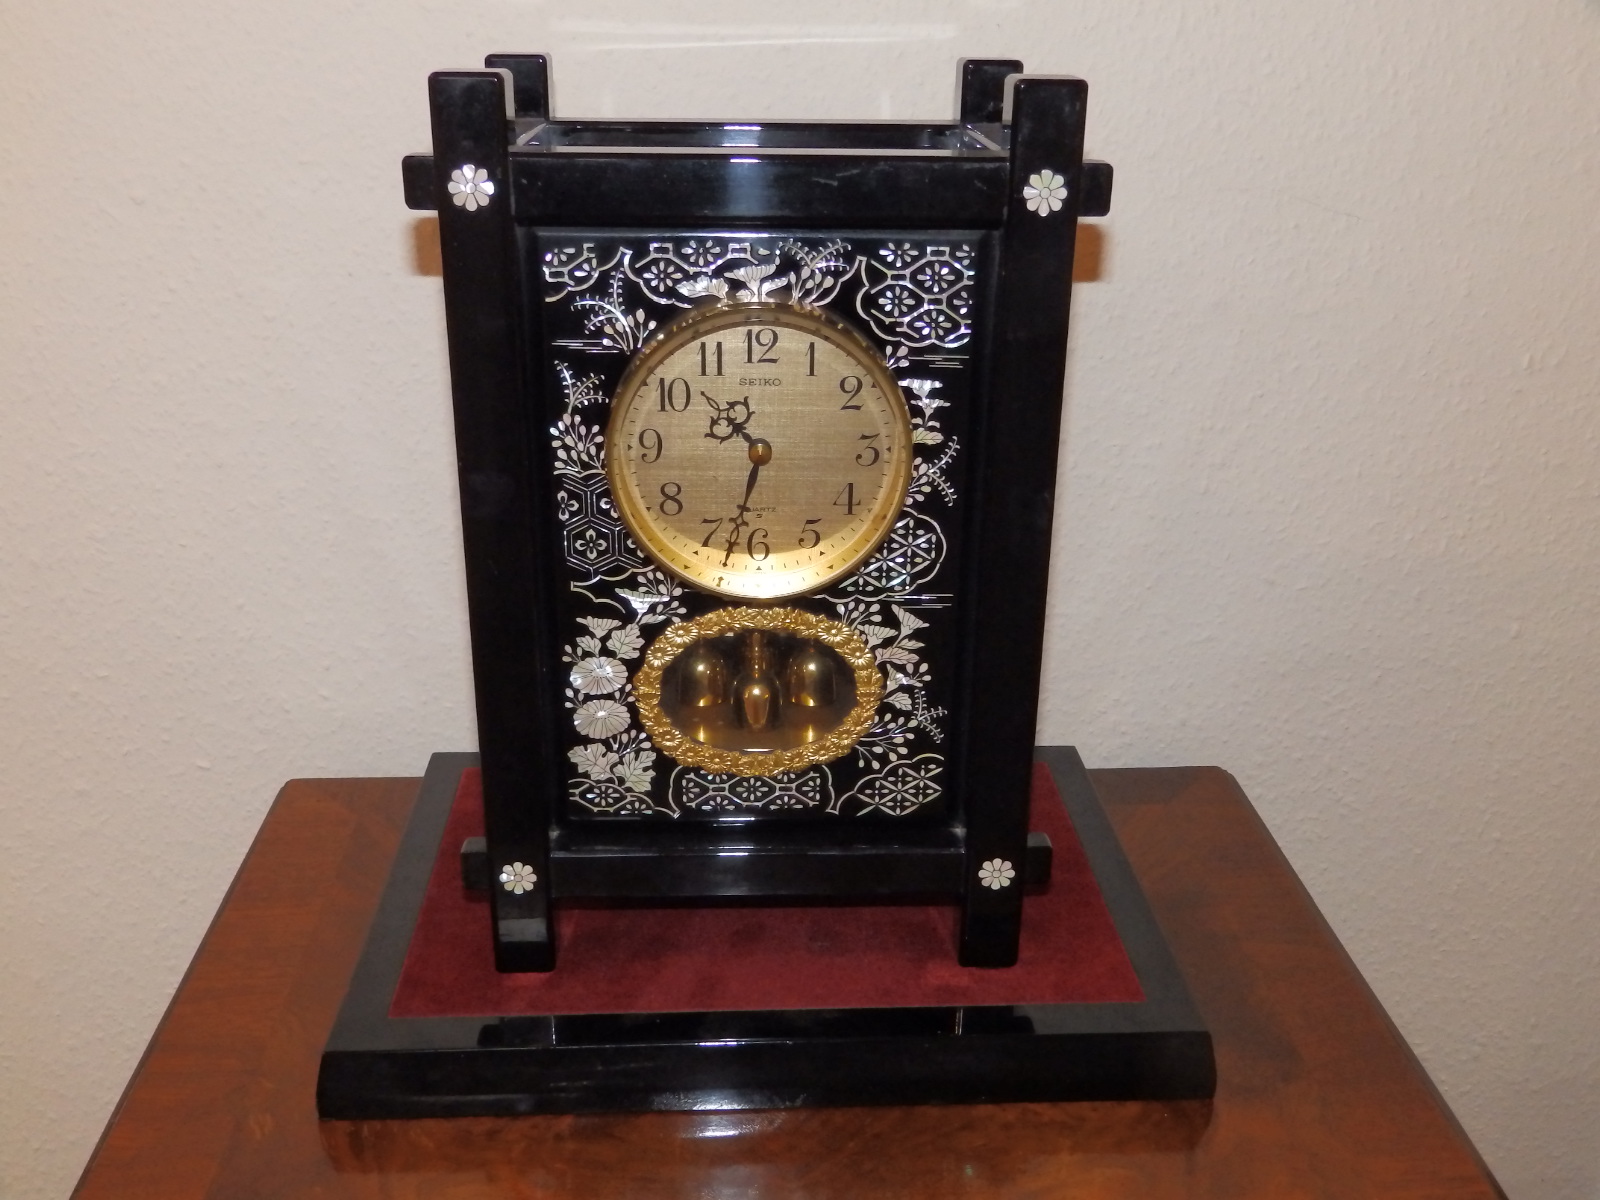 A modern Japanese Seiko battery operated mantel clock in ebonsied Aesthetic taste, 14" high.